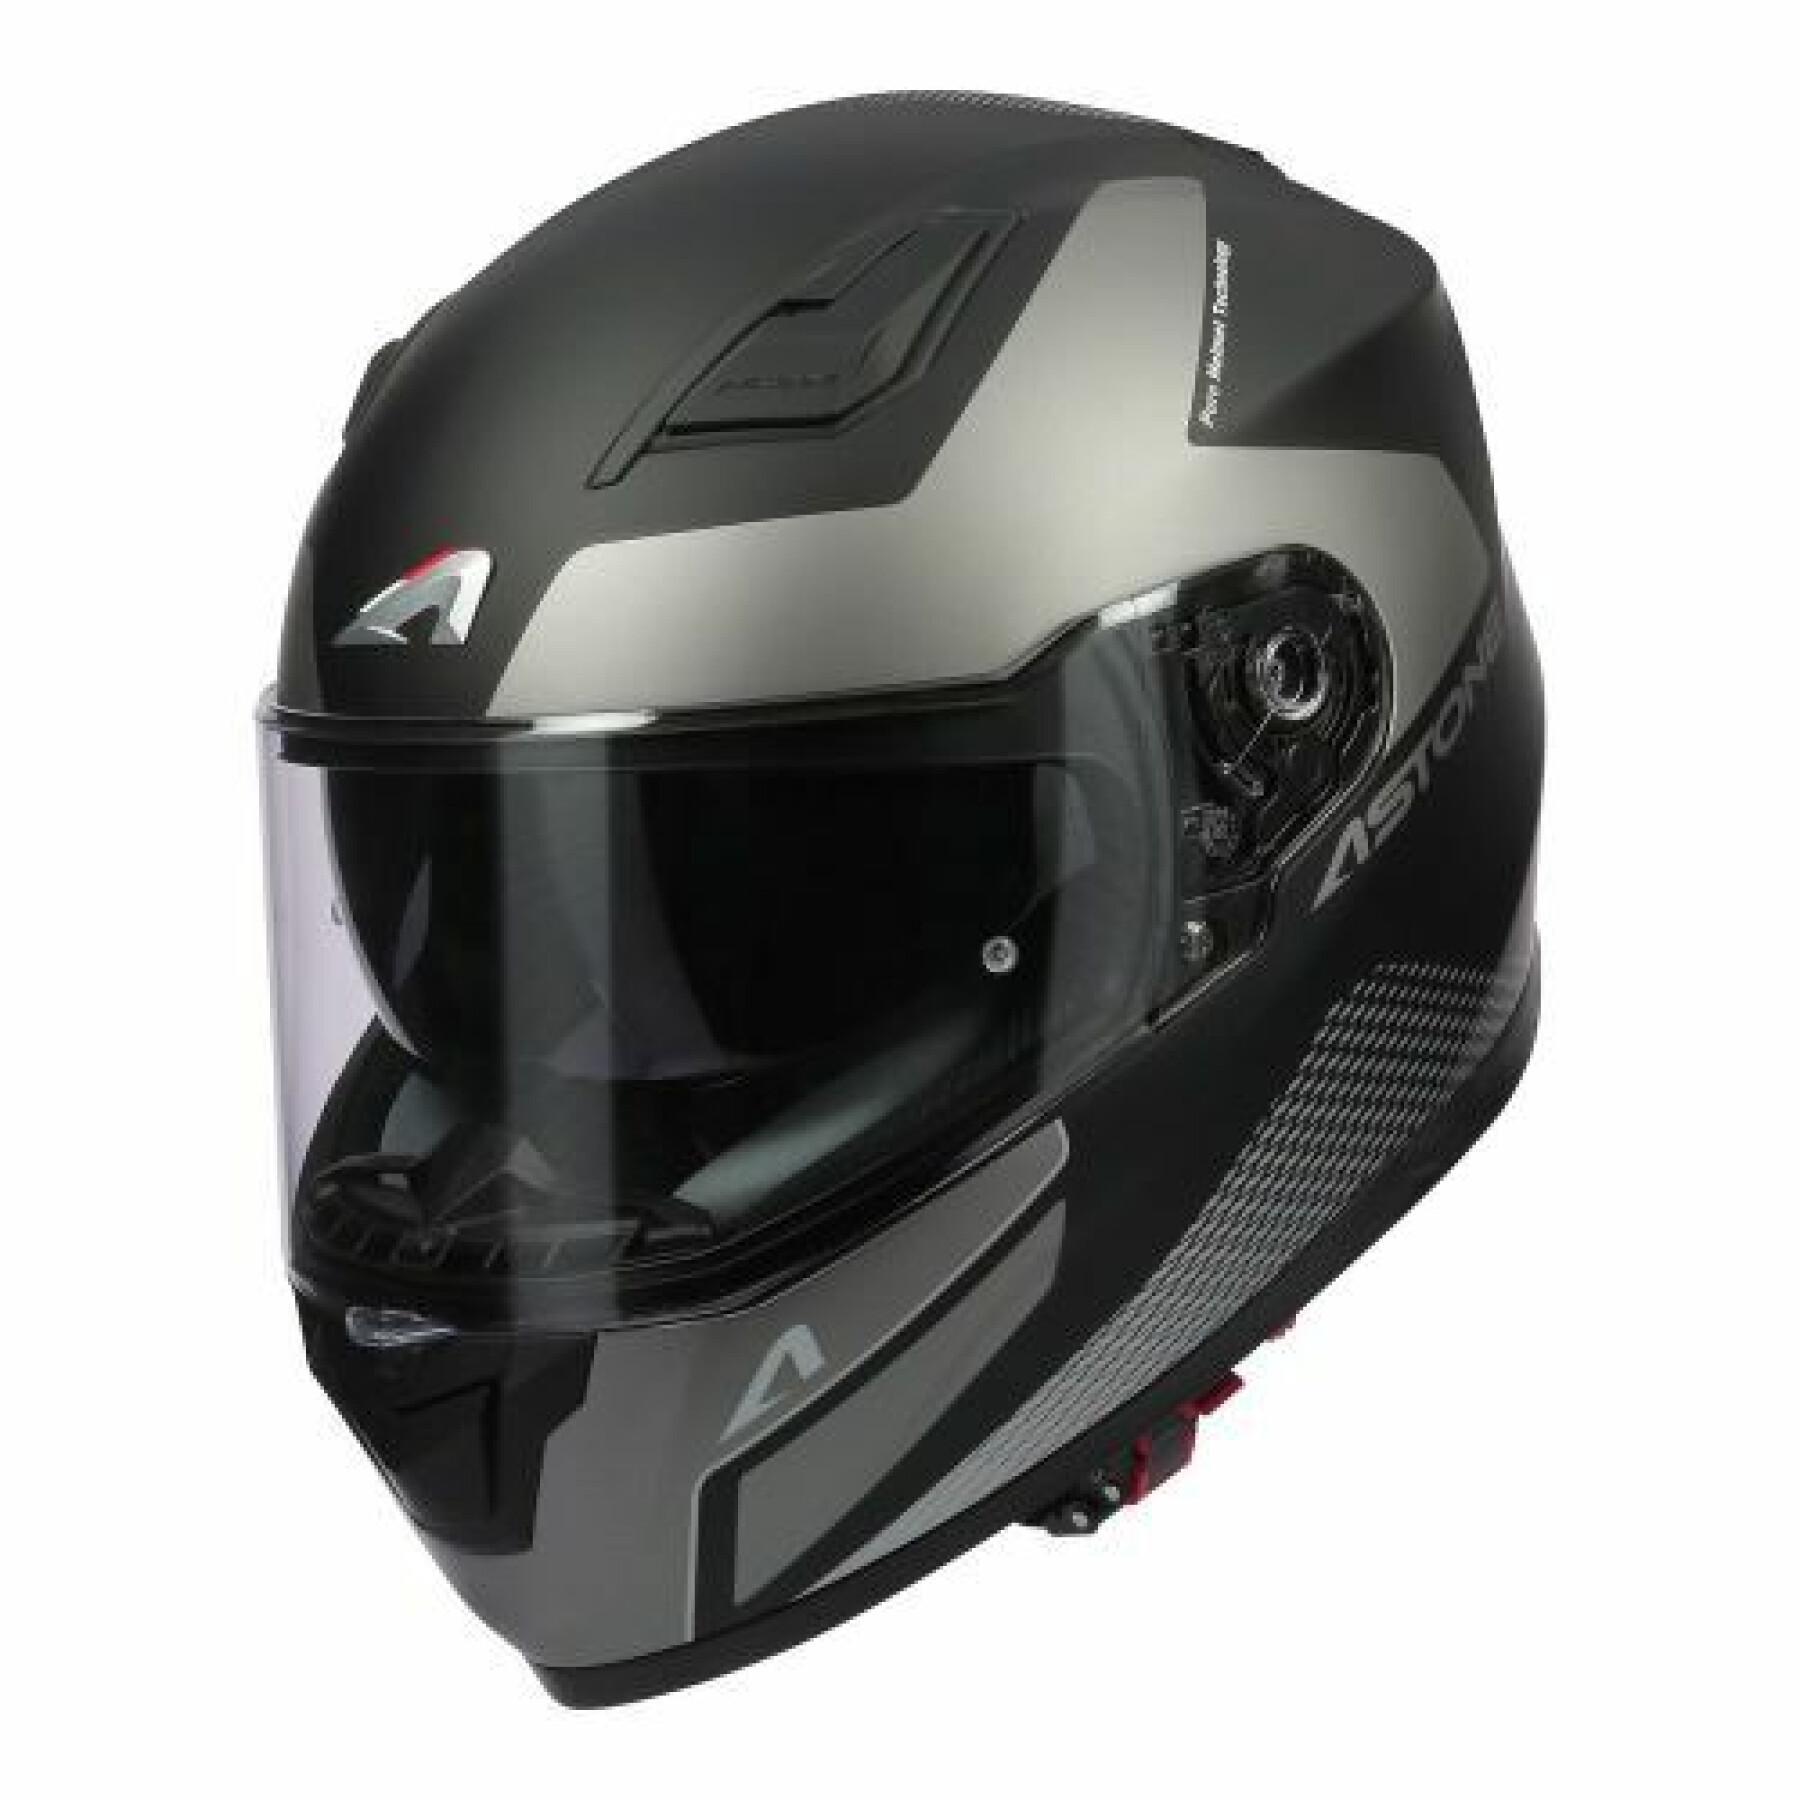 Full face motorcycle helmet Astone Gt906 Race